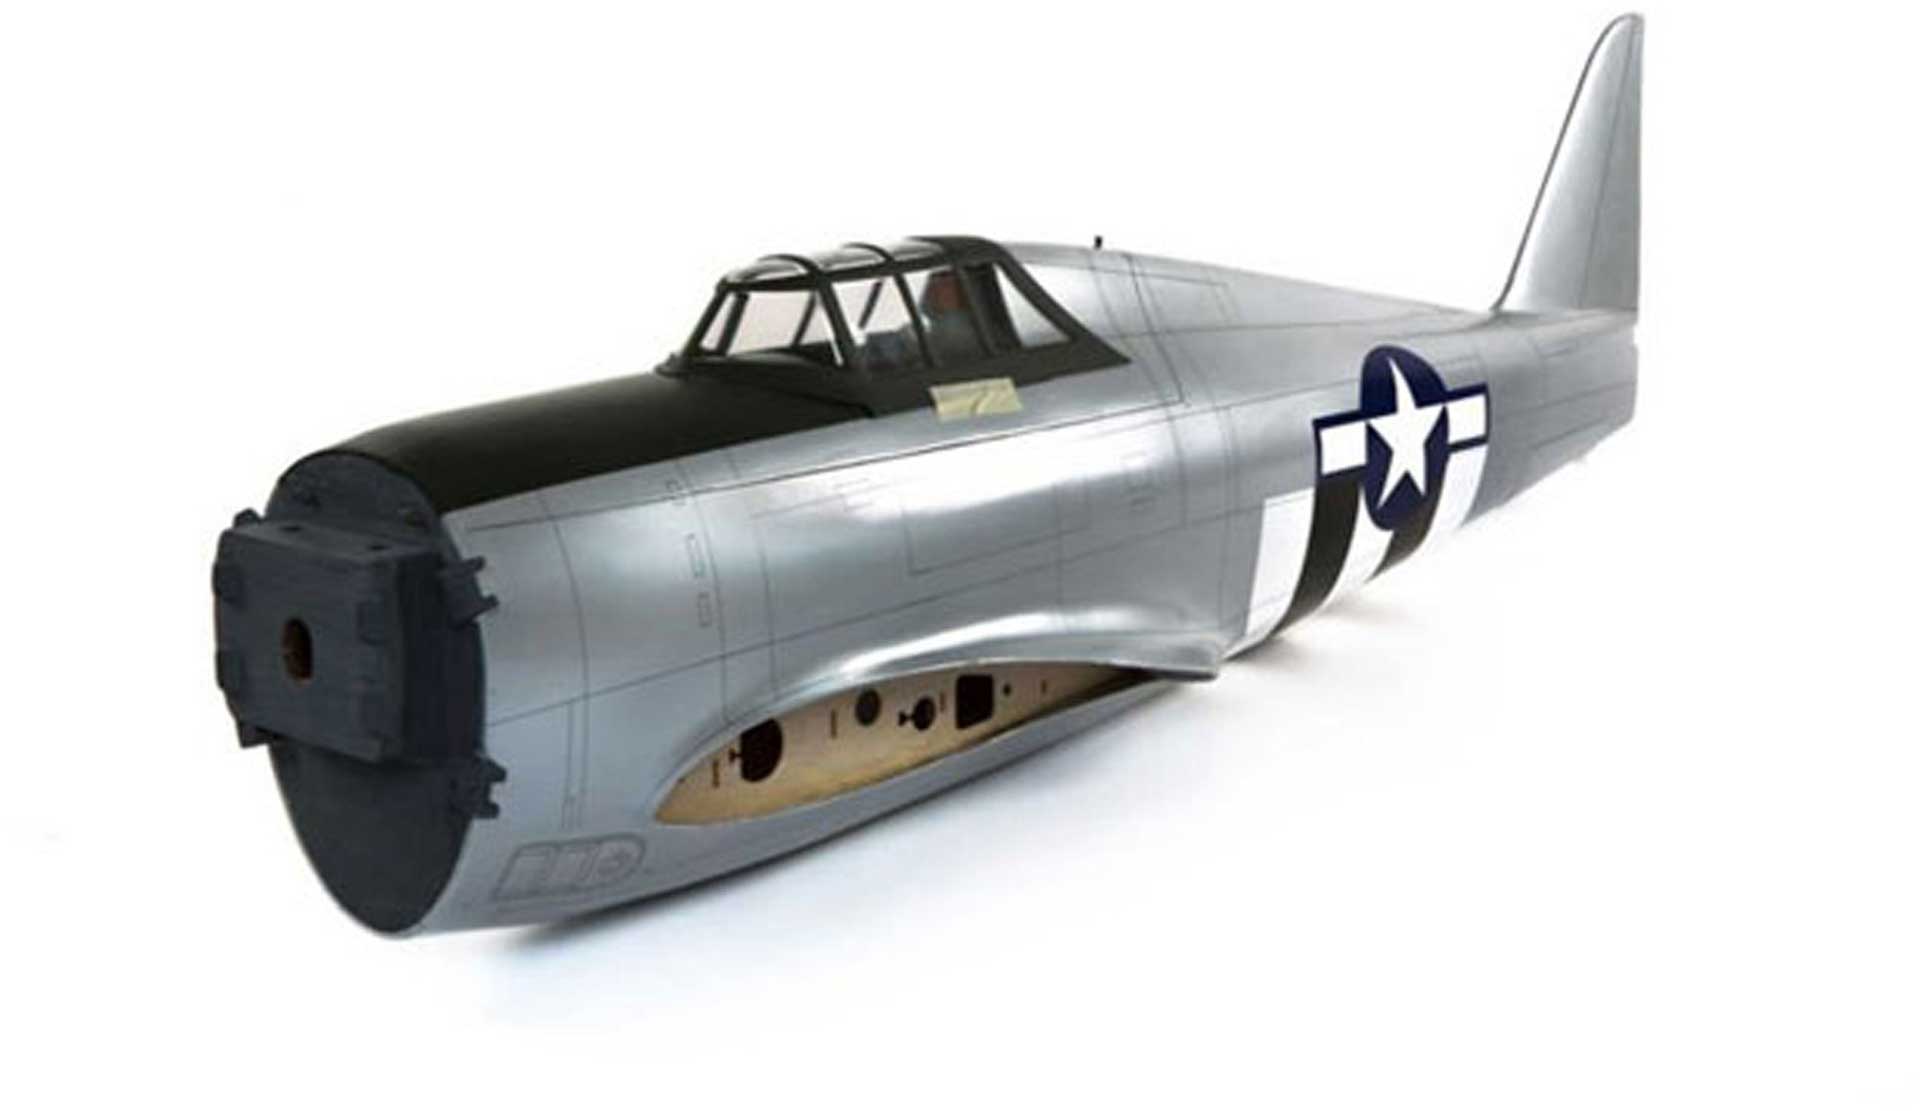 HANGAR 9 FUSELAGE WITH HATCH: P-47D THUNDERBOLT 20CM³